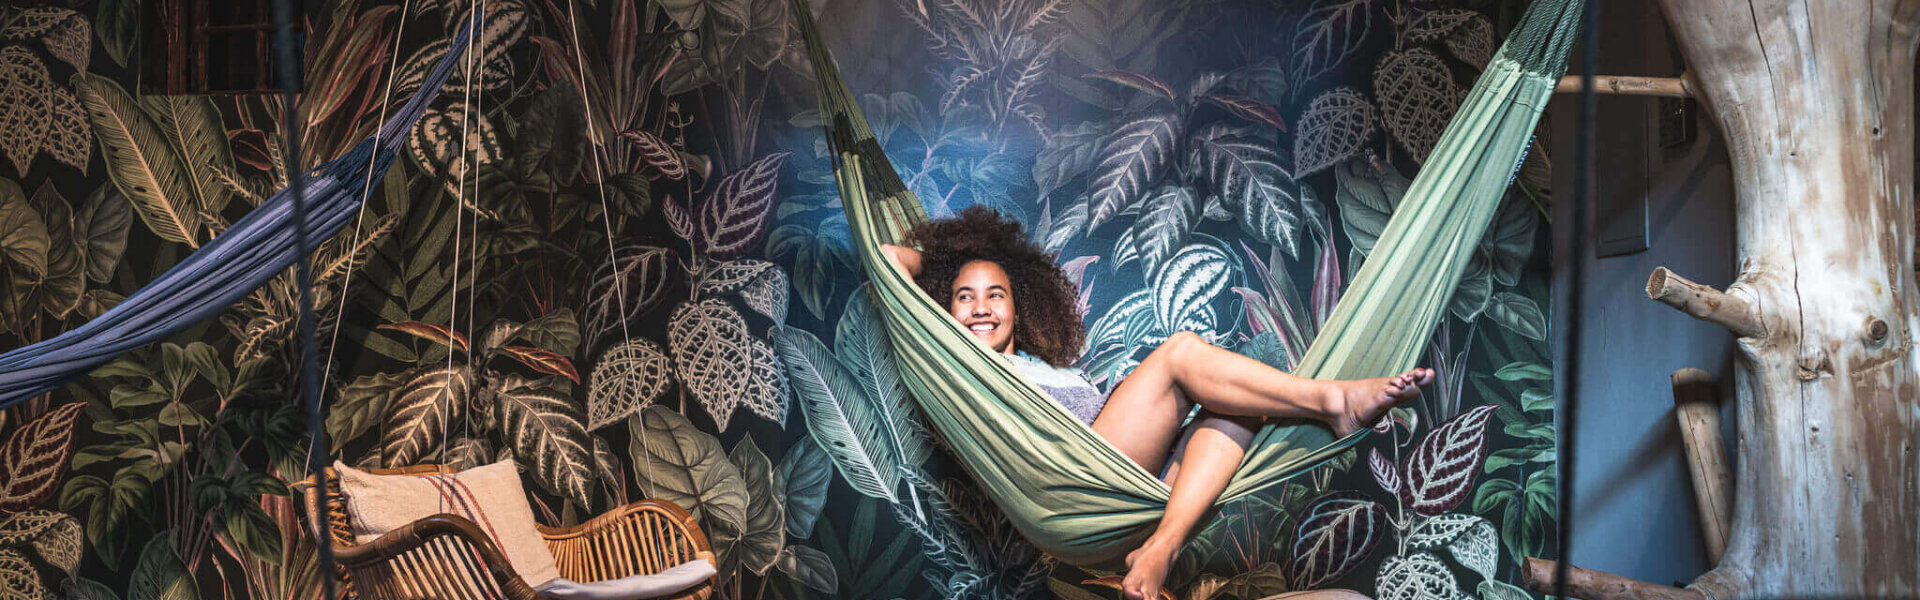 Woman in a hammock in the Flying Spa